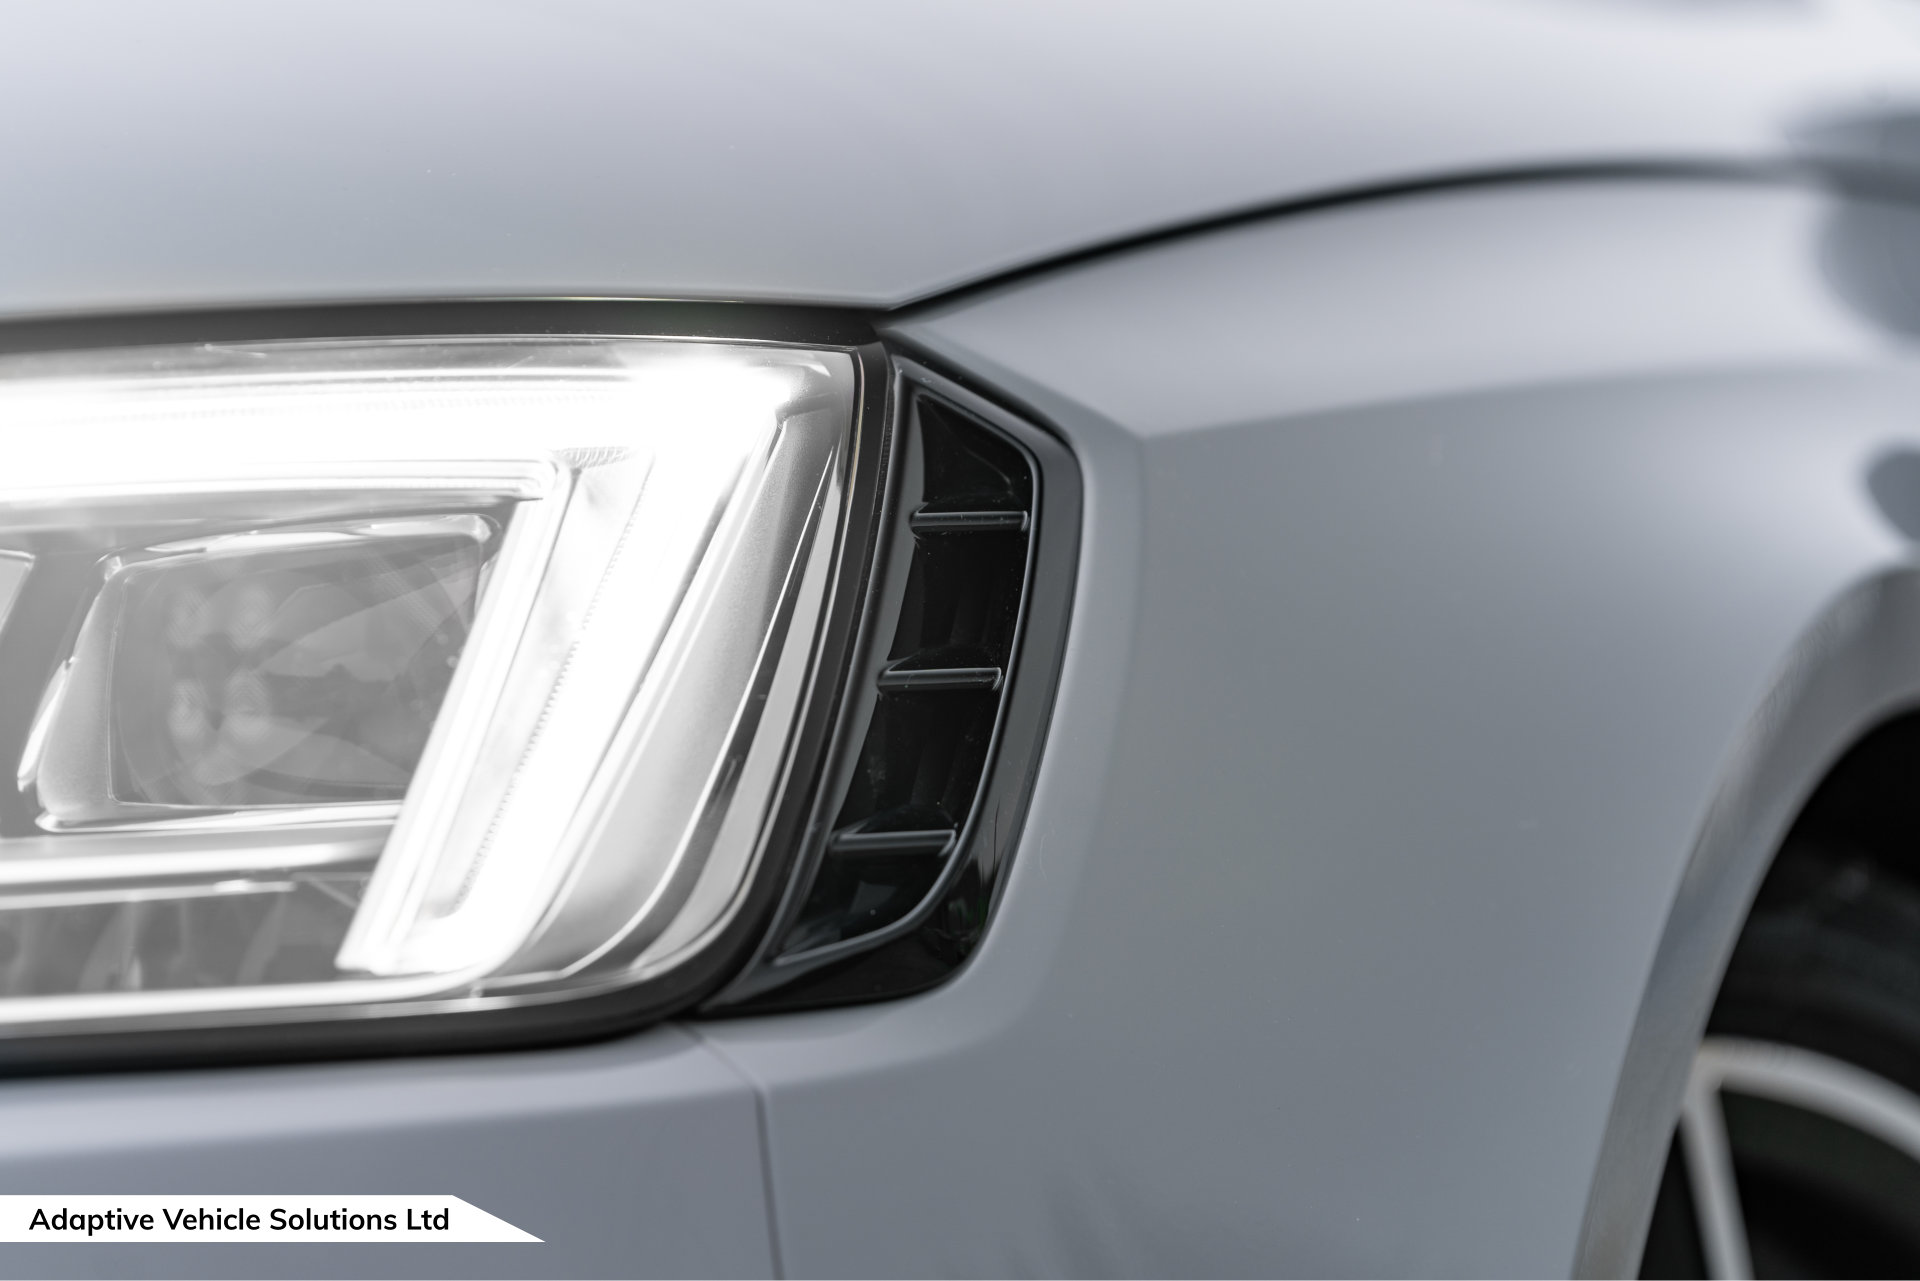 2019 Audi RS4 Avant Sport Edition Nardo Grey black light intake